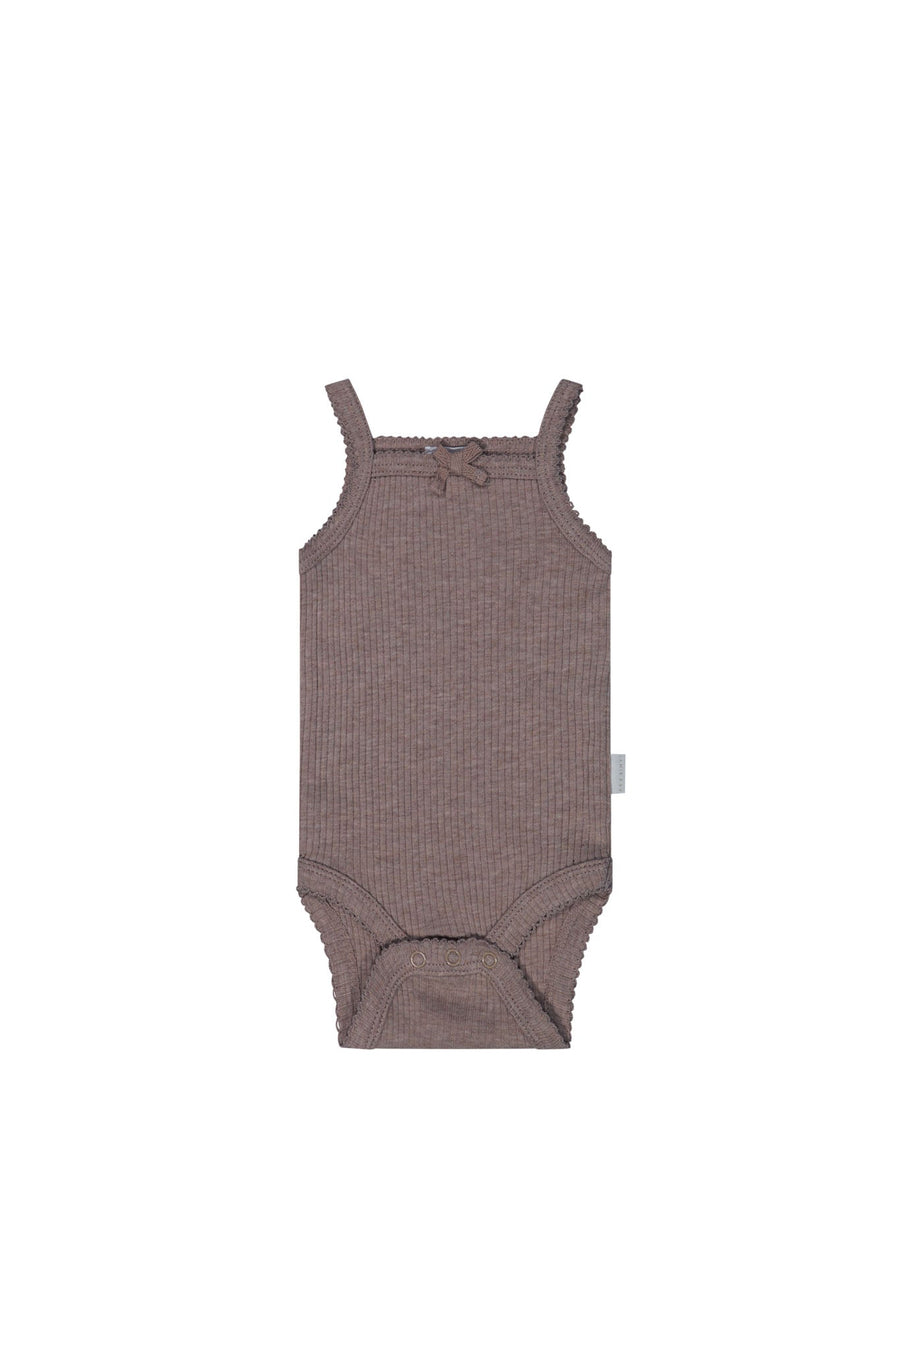 Organic Cotton Modal Singlet Bodysuit - Truffle Marle Childrens Bodysuit from Jamie Kay NZ